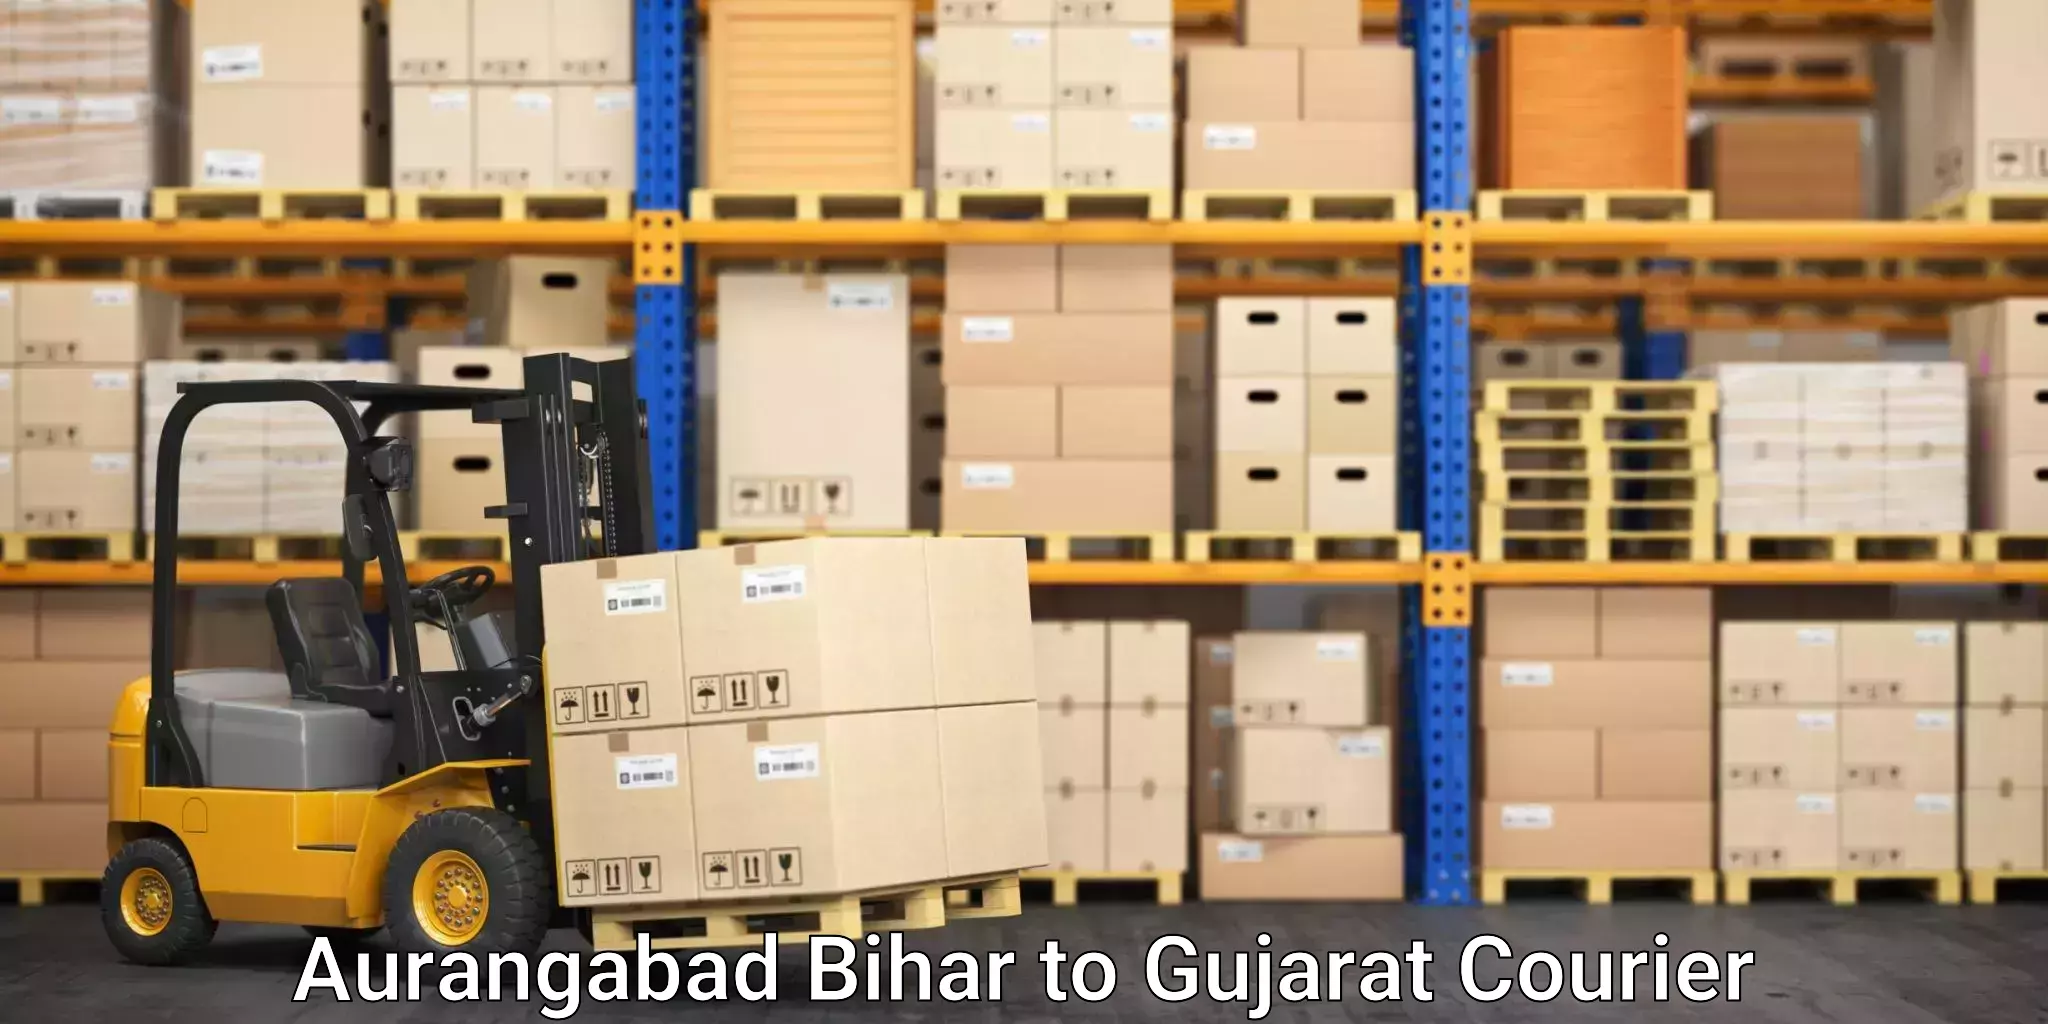 Furniture moving specialists Aurangabad Bihar to Khedbrahma